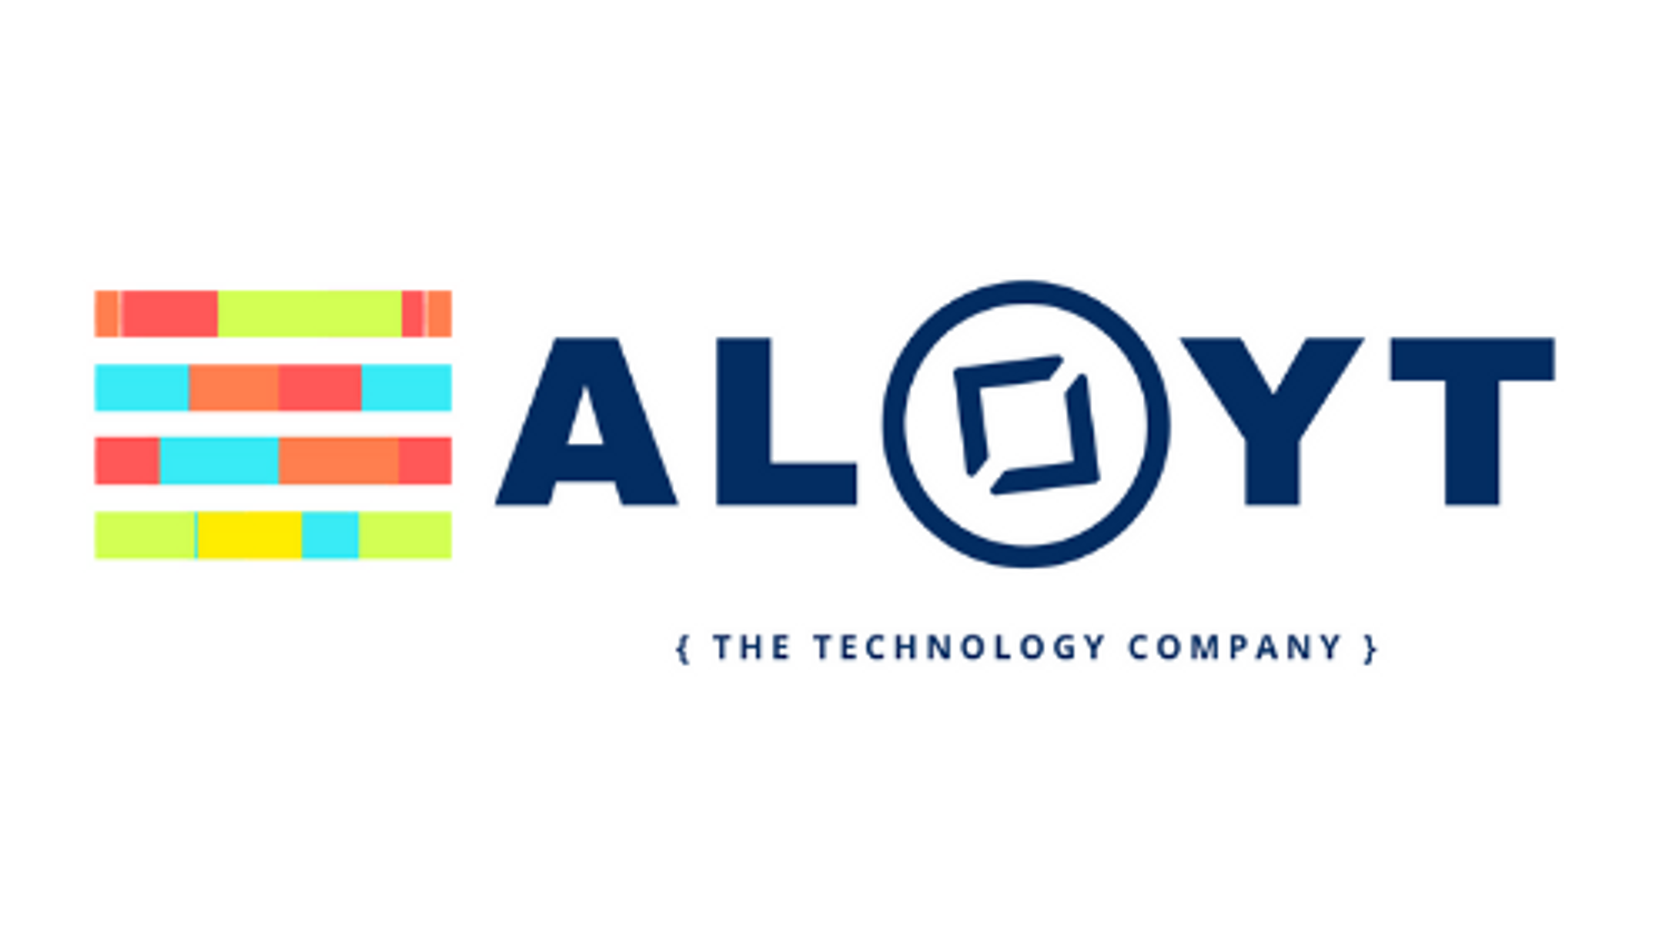 ALOYT - THE TECHNOLOGY COMPANY VIDEO SPACE